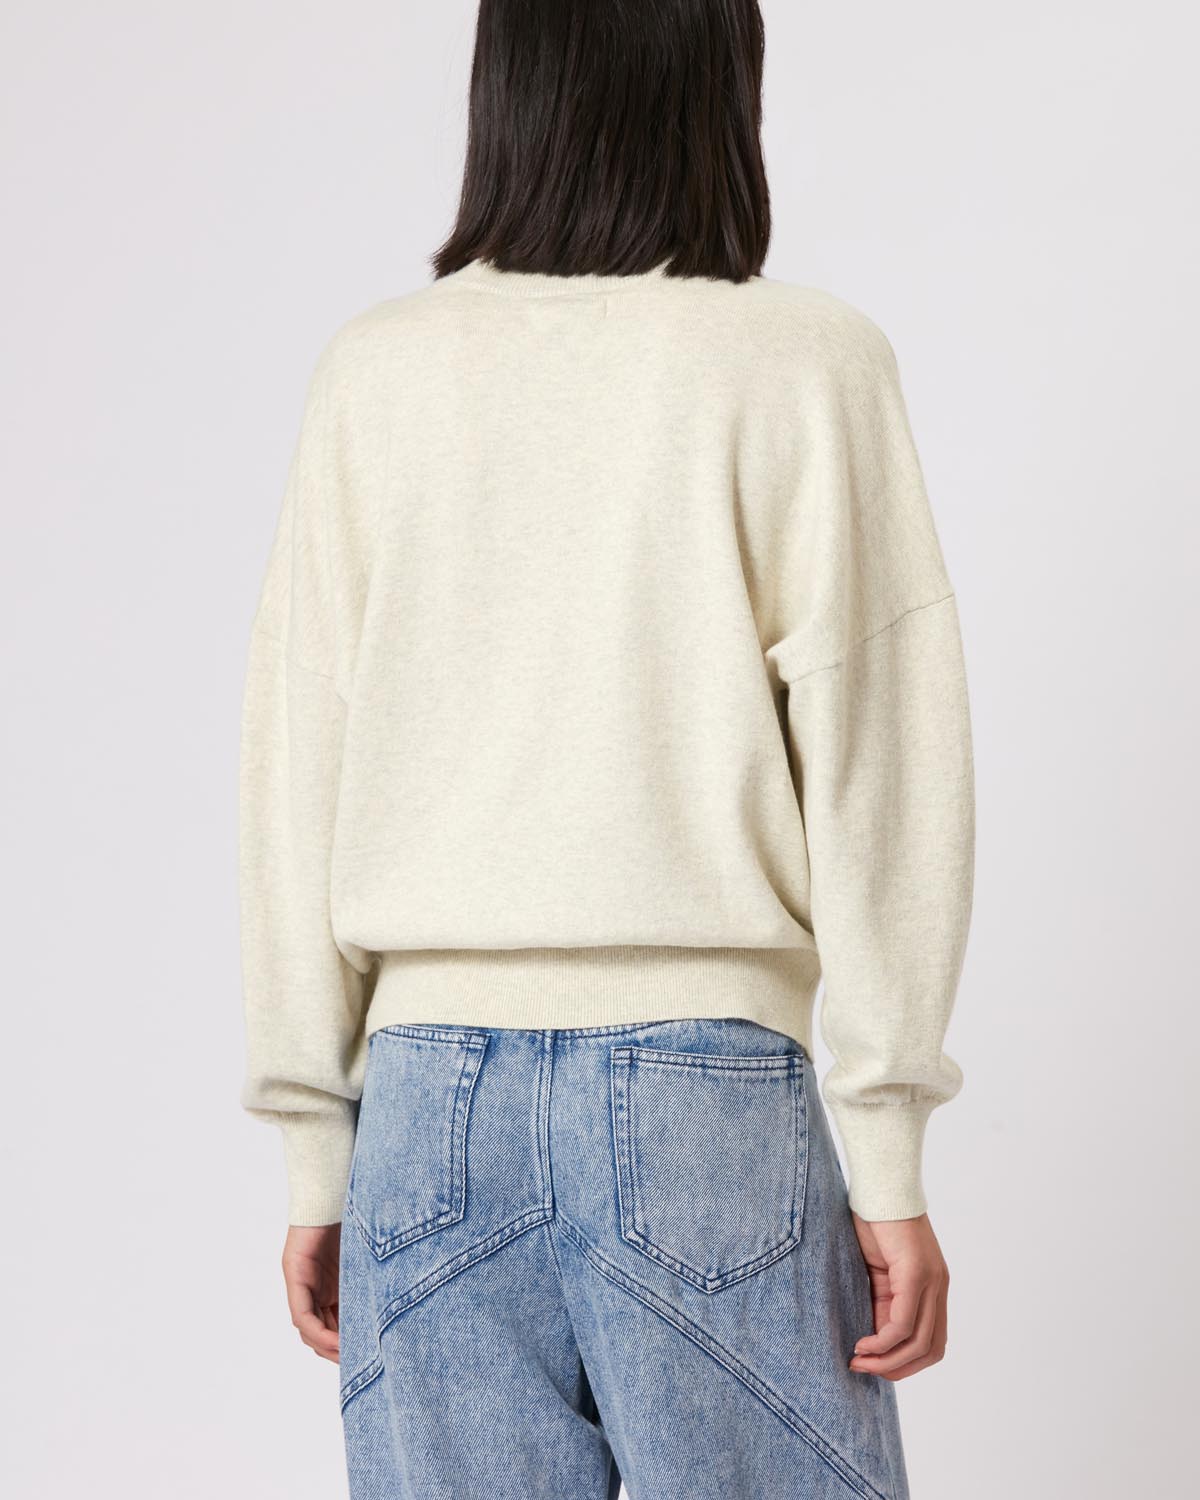 Marisans sweater Woman Light gray 3